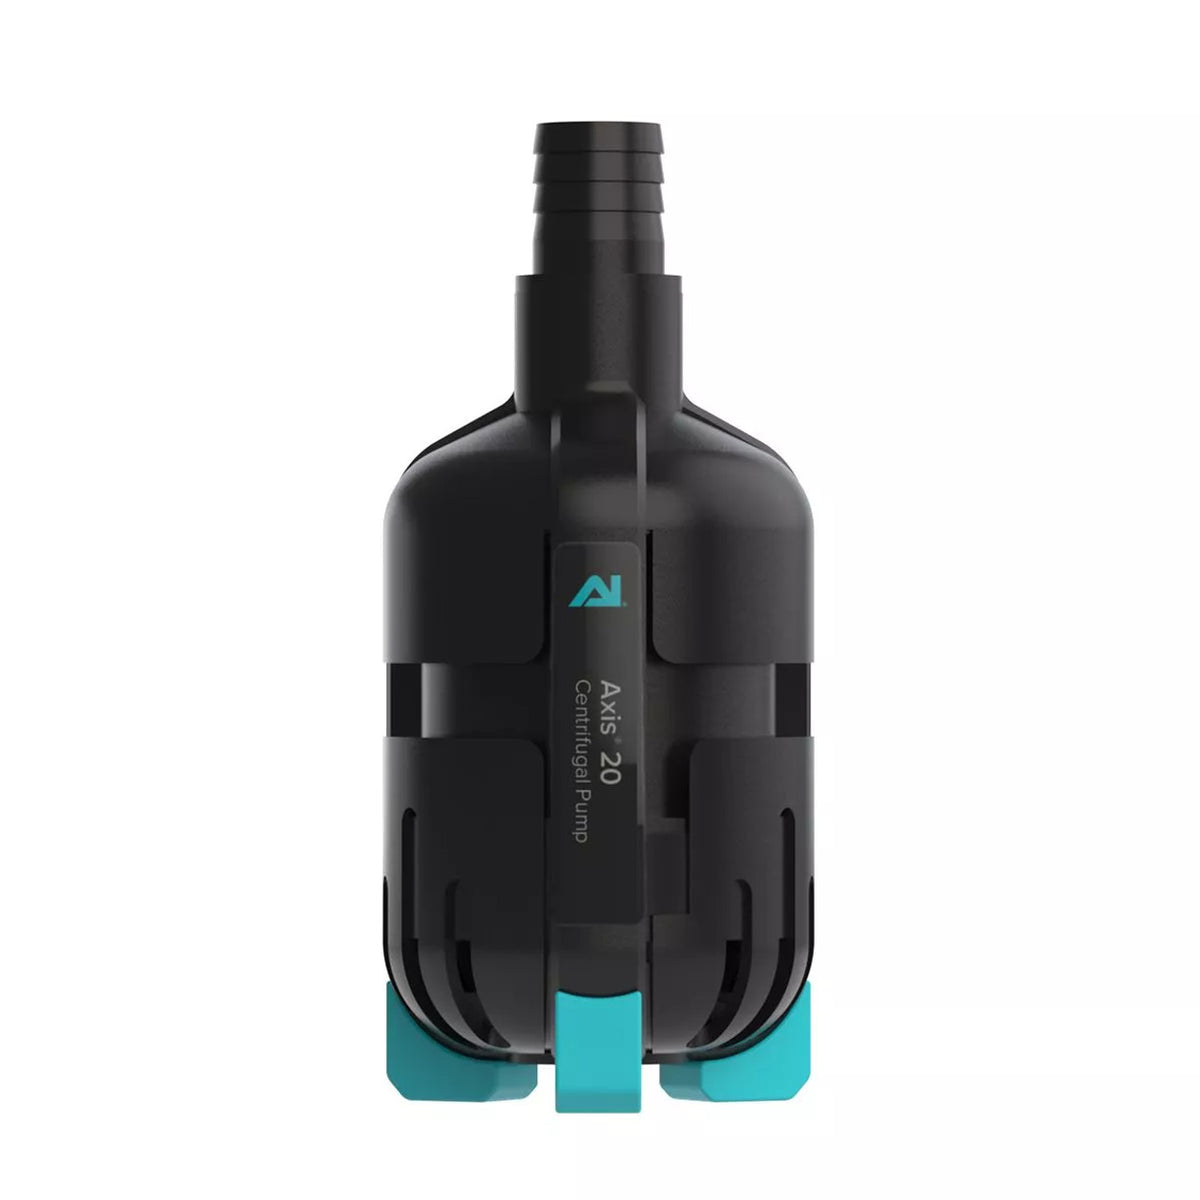 Aqua Illumination Axis 40 Centrifugal Sump Pump